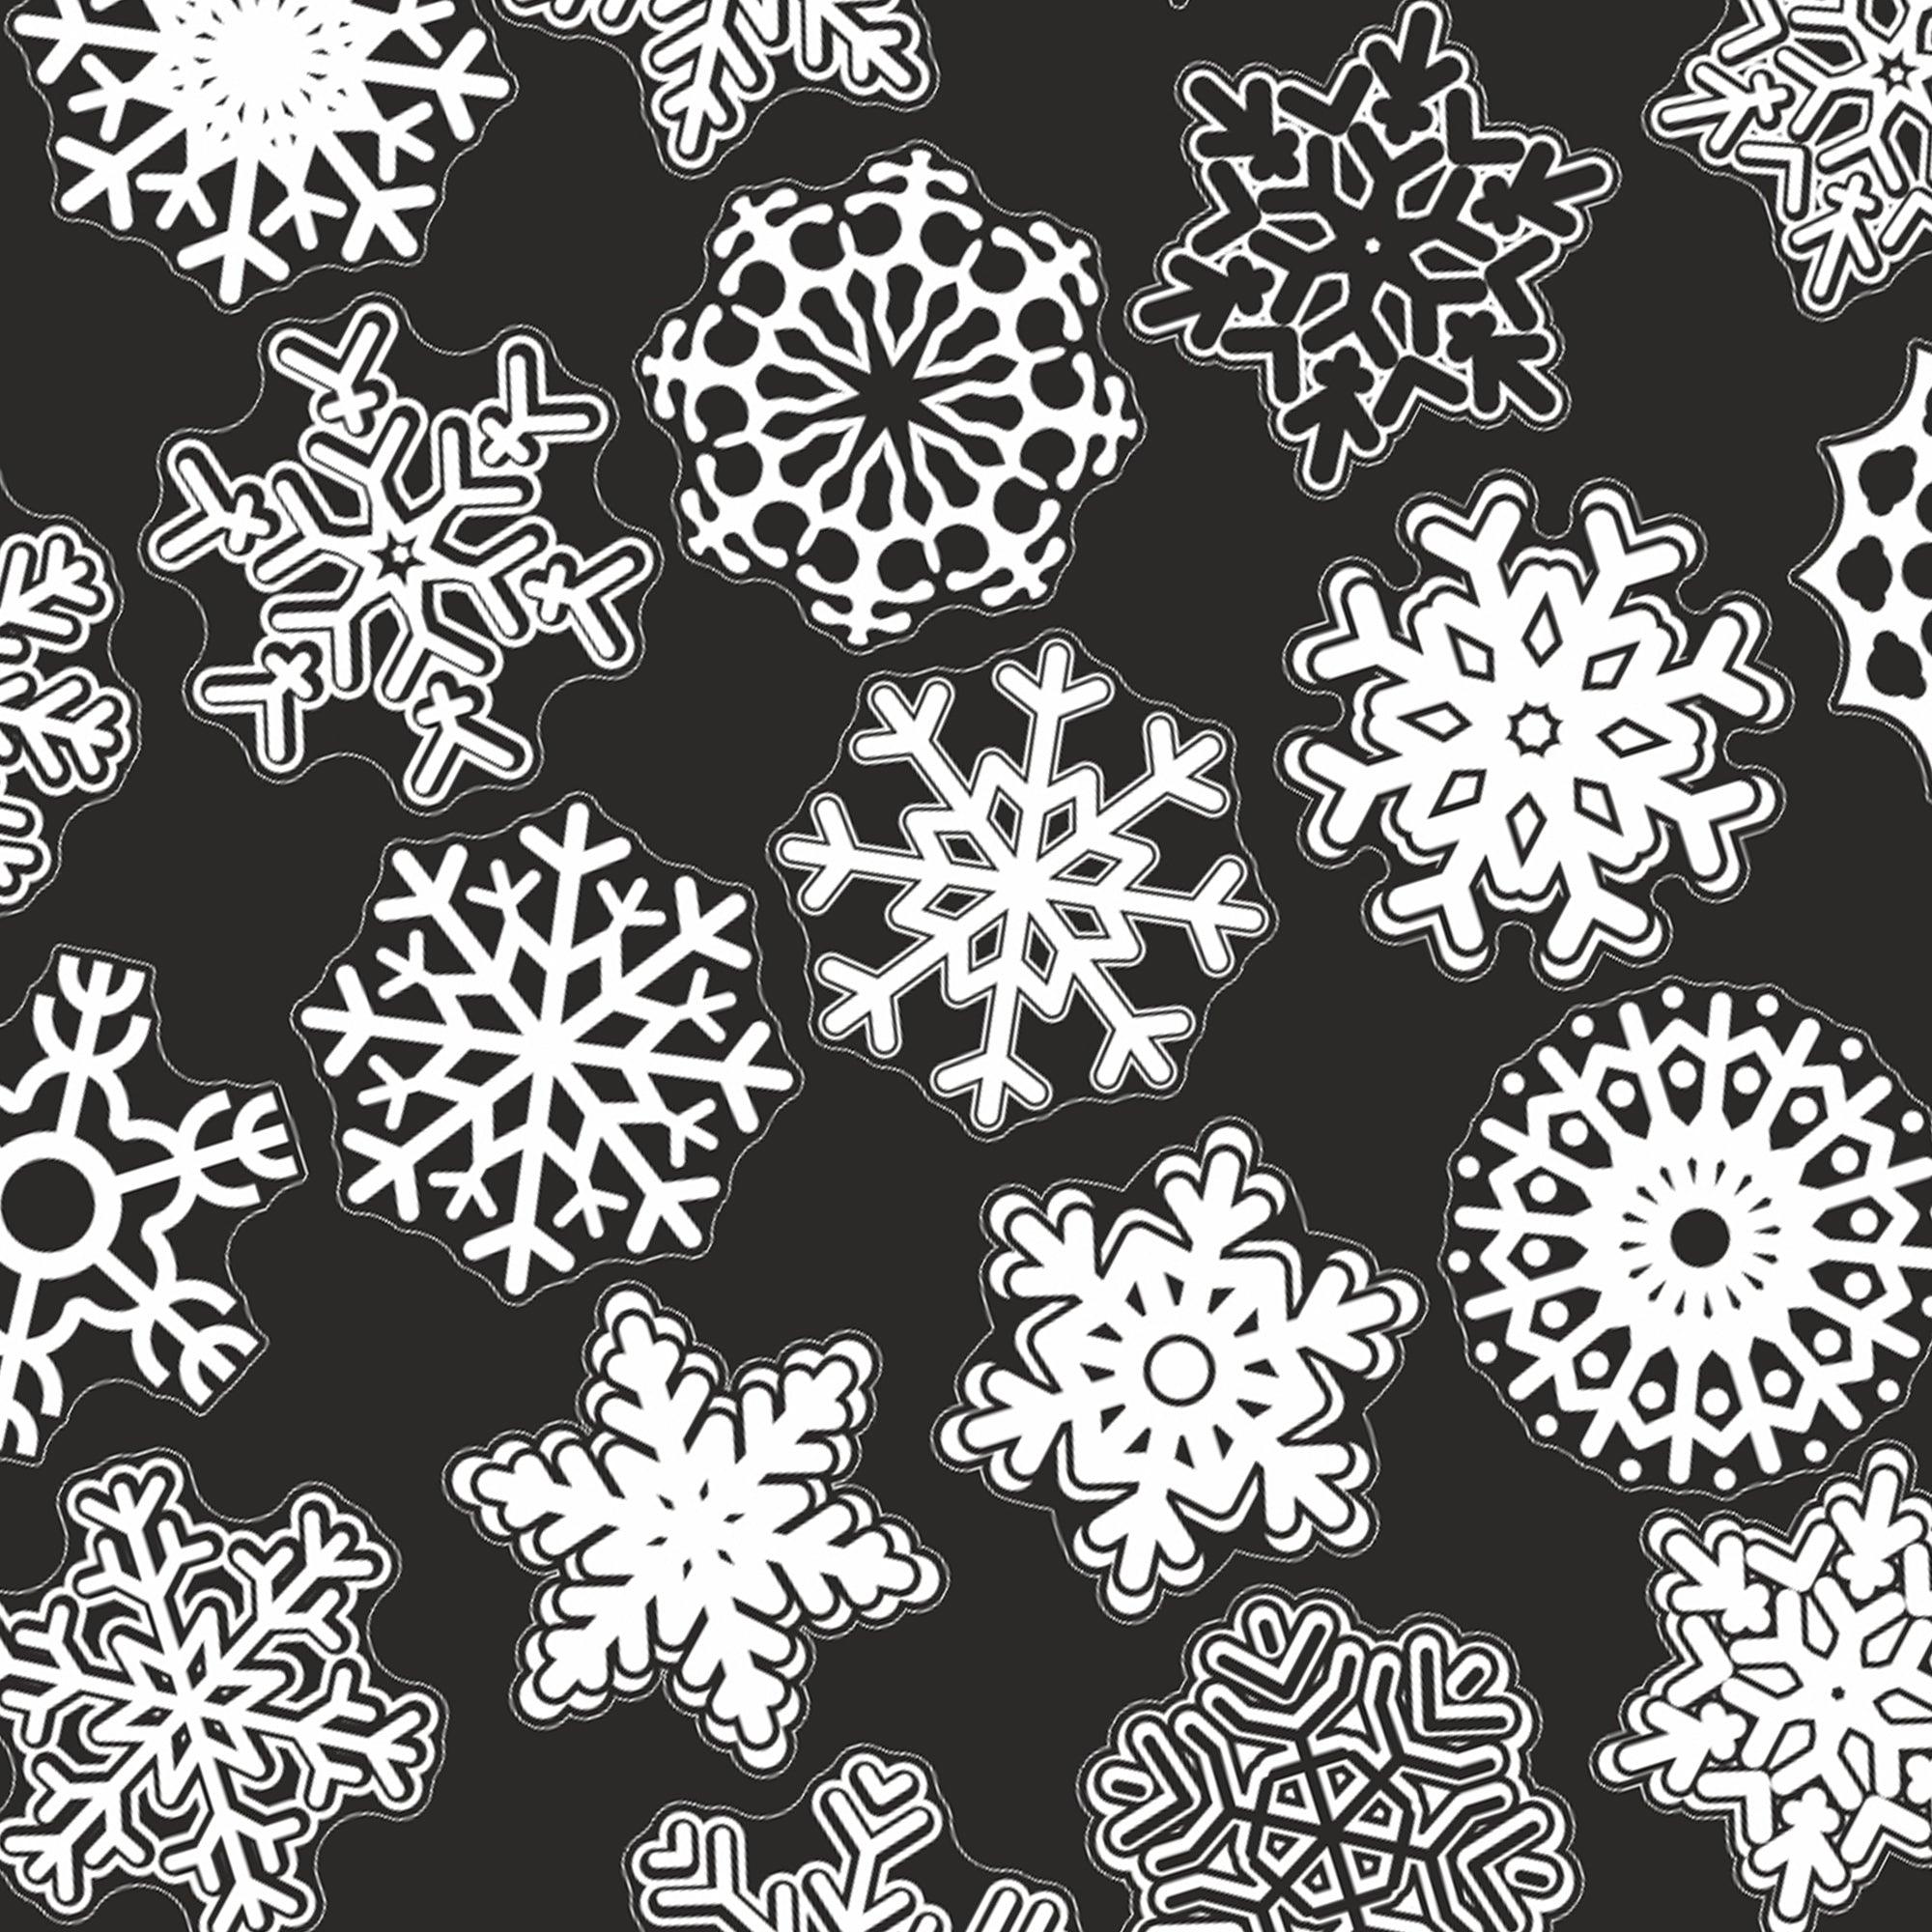 40 Unique 75mm Diameter Snowflakes Christmas Window Display